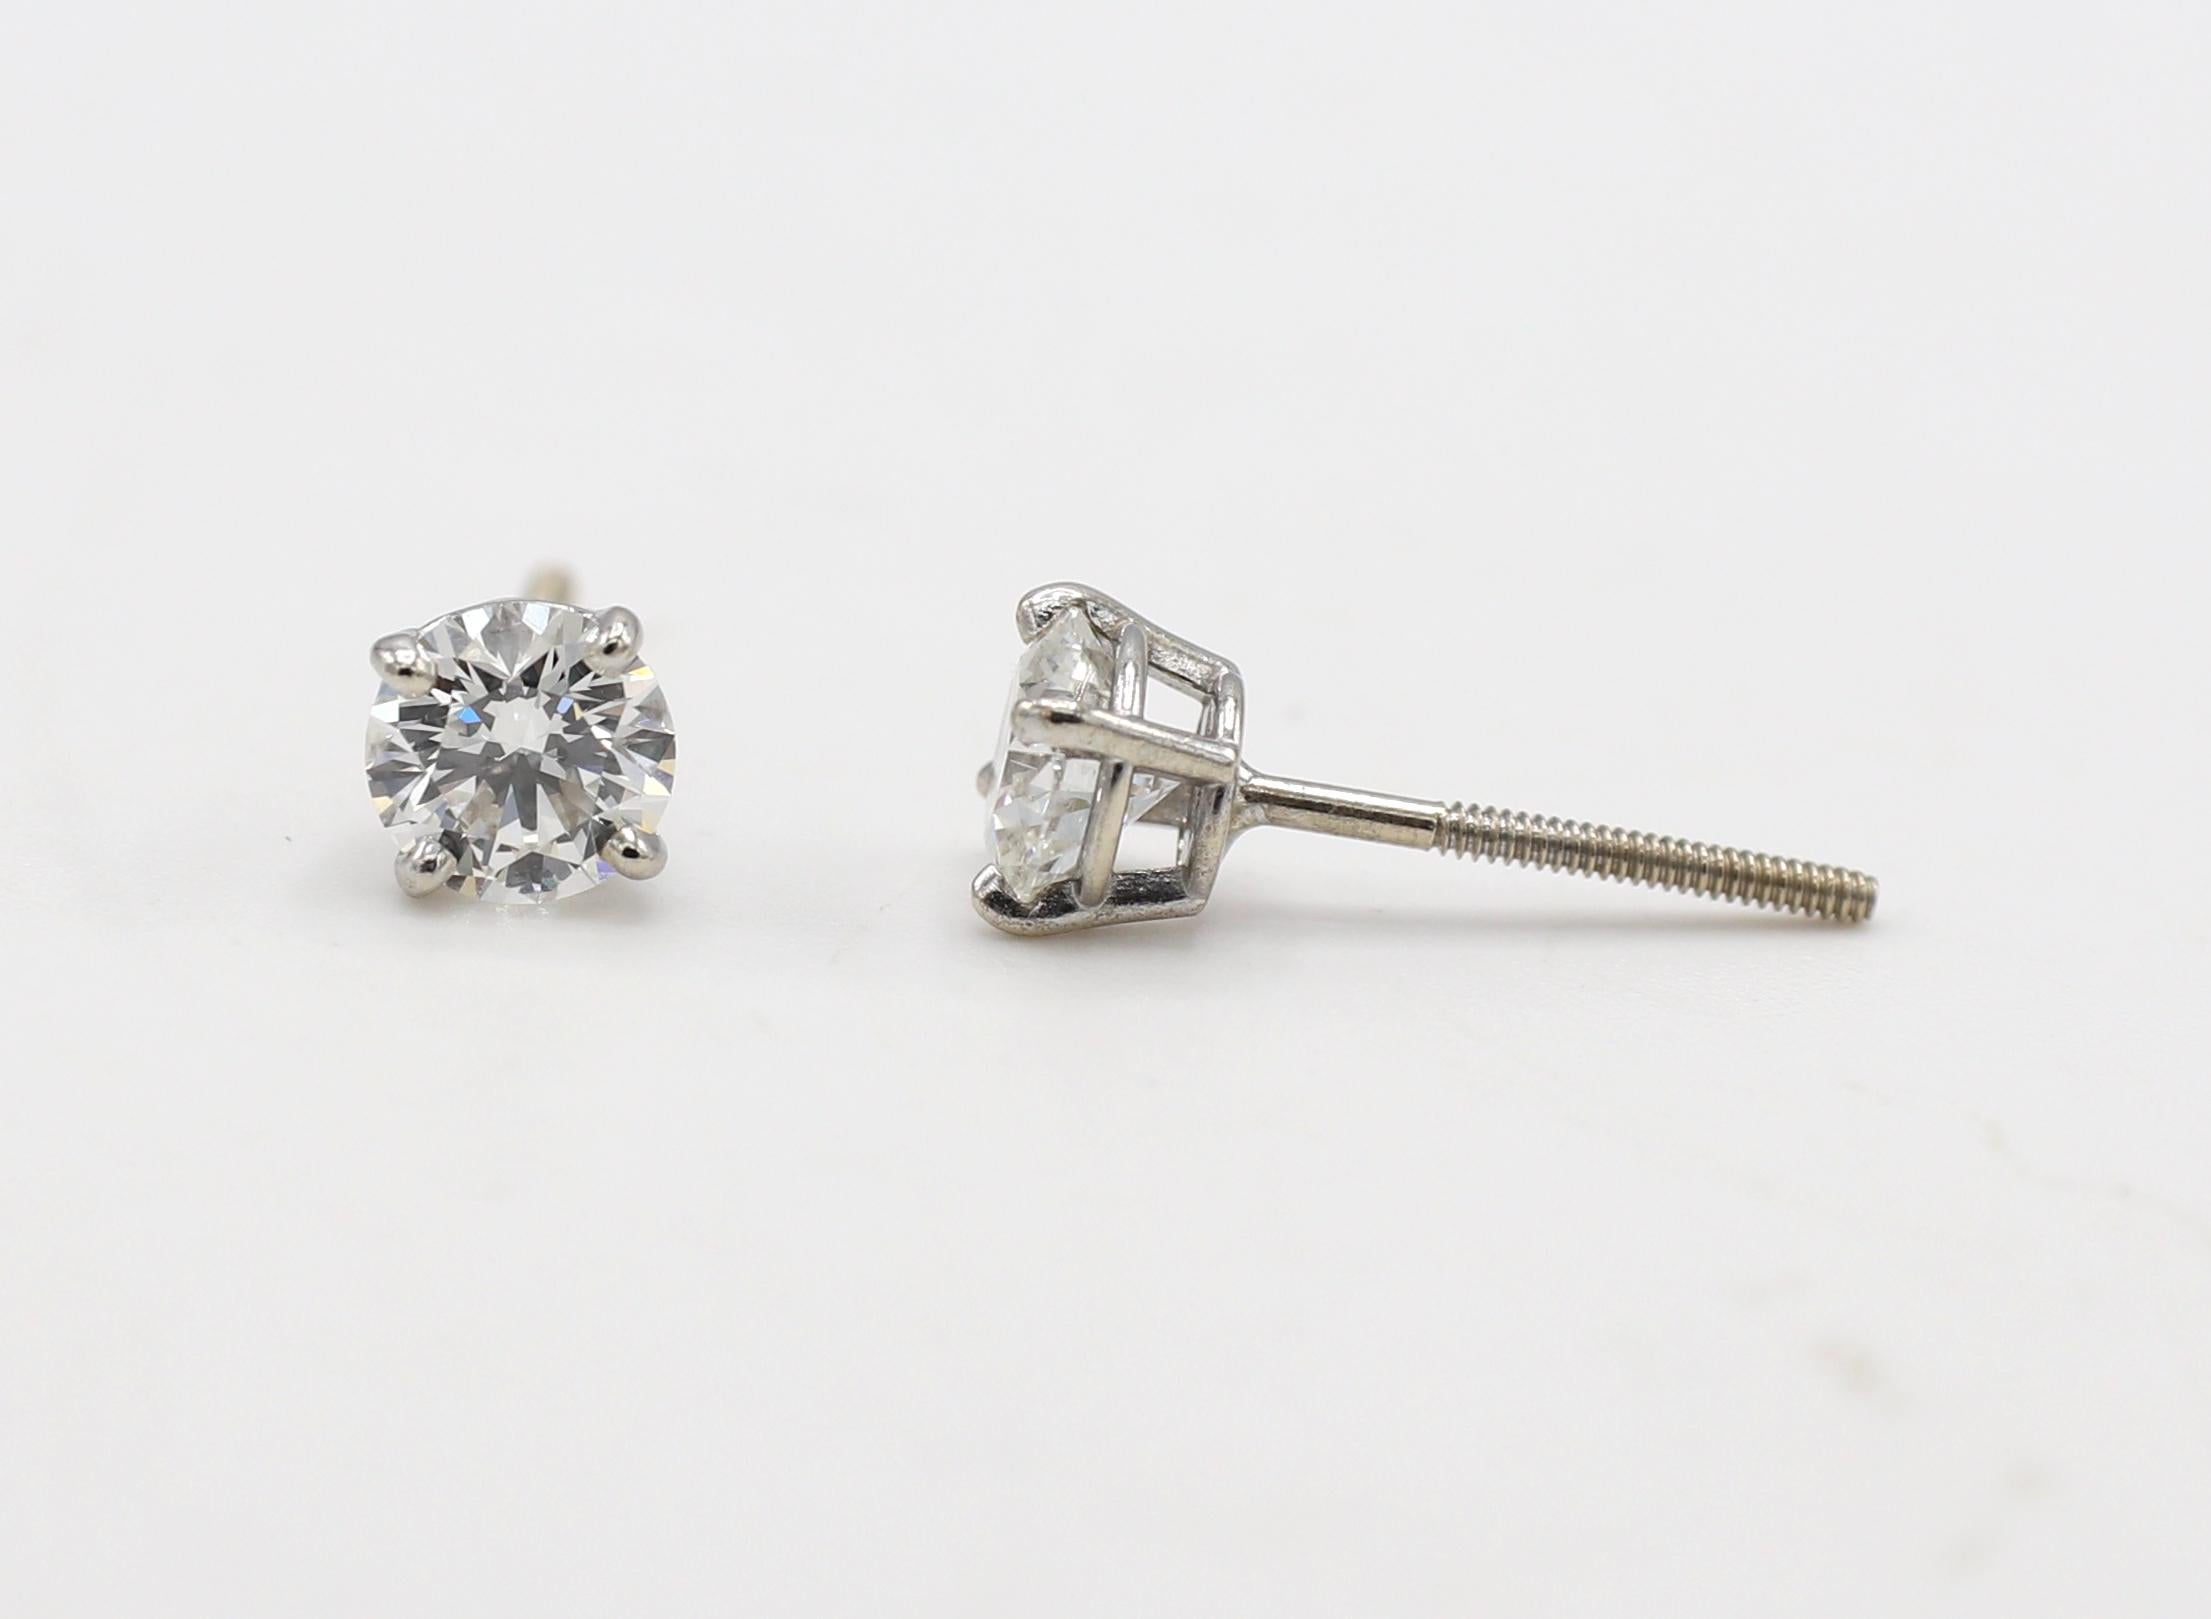 White Gold 1.10 Carat Round Natural Diamond Stud Earrings
Metal: 14K white gold
Weight: 1 gram
Diamonds: 2 round natural diamonds, approx. 1.10 CTW G SI1
Backs: Screw backs